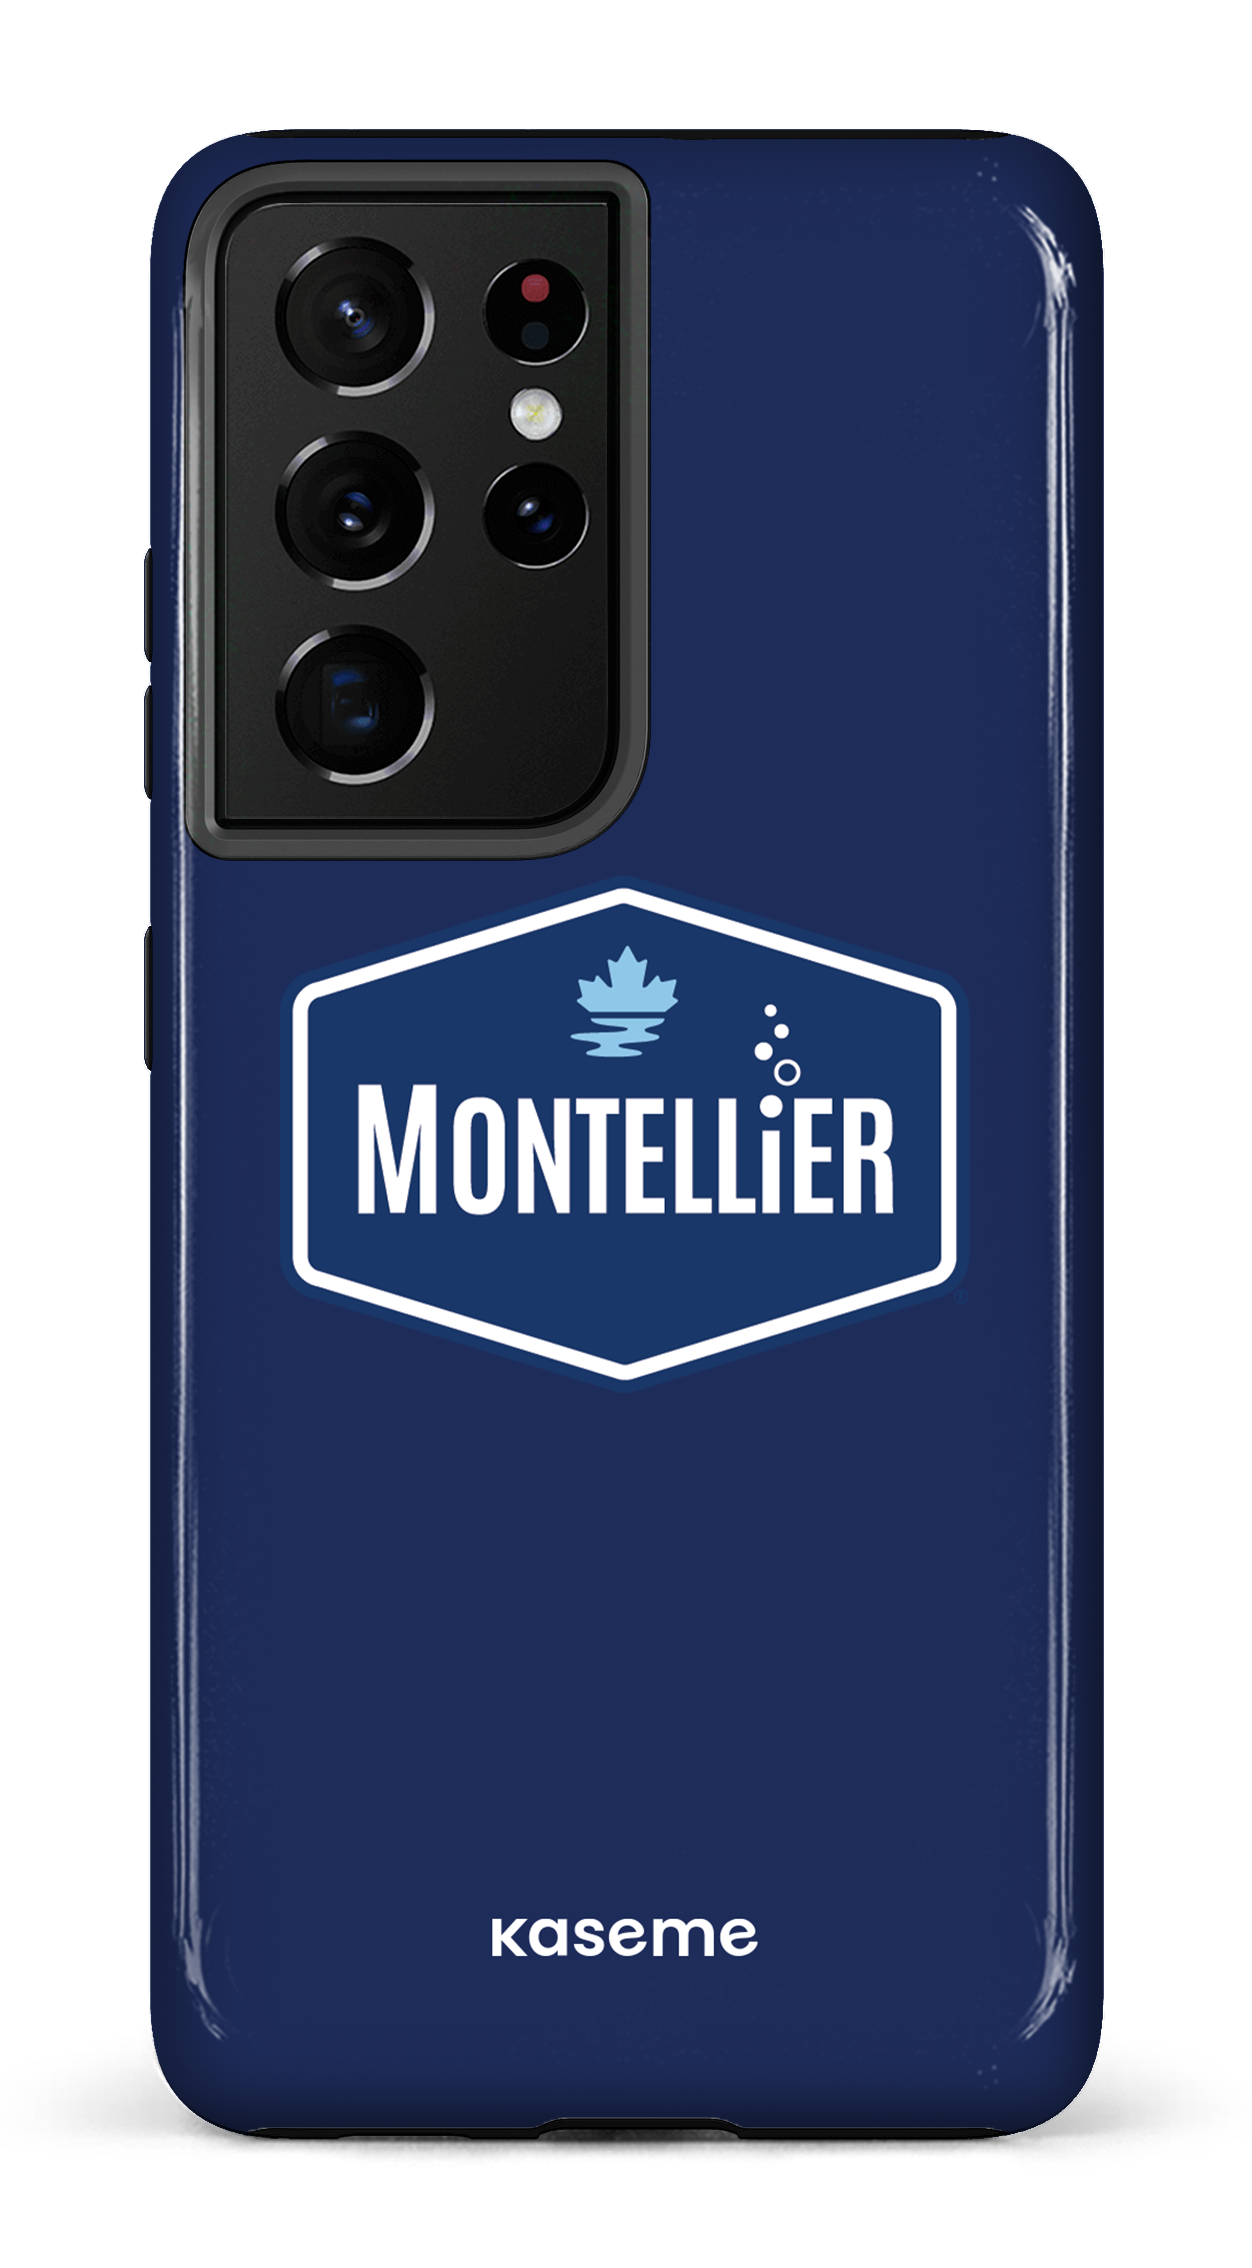 Montellier - Galaxy S21 Ultra